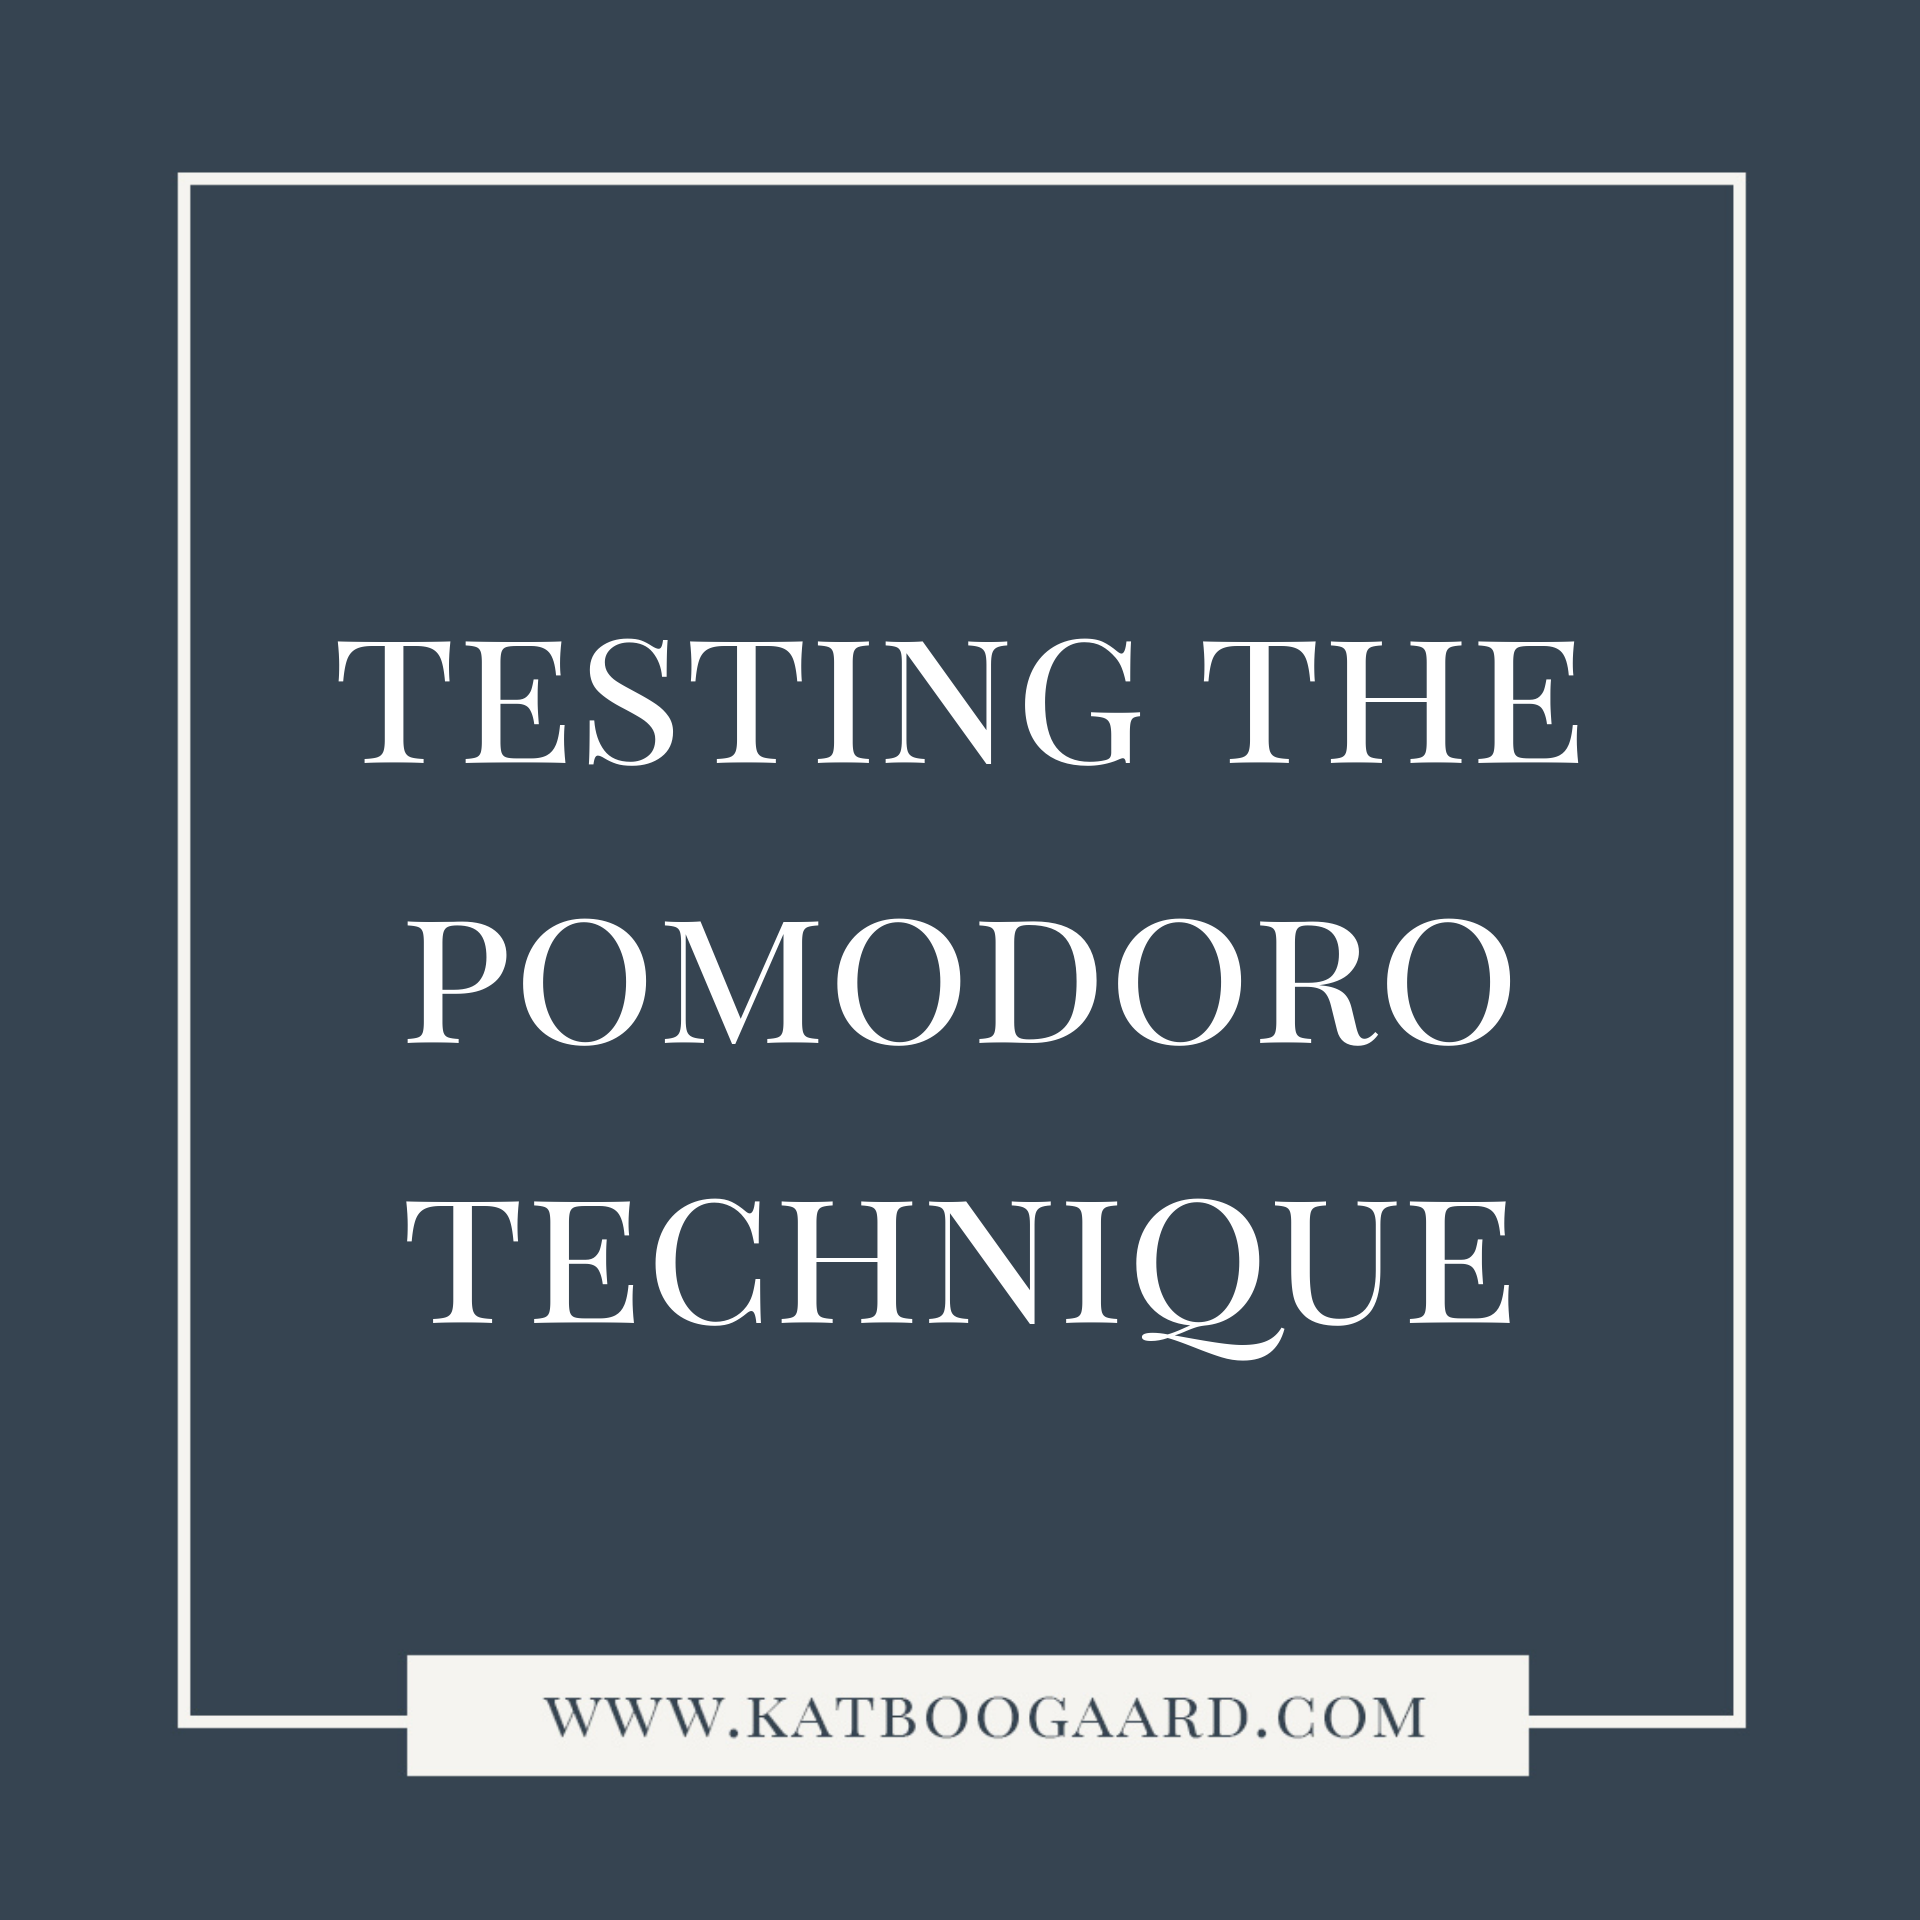 Pomodoro Technique: Meaning, Benefits & Intervals